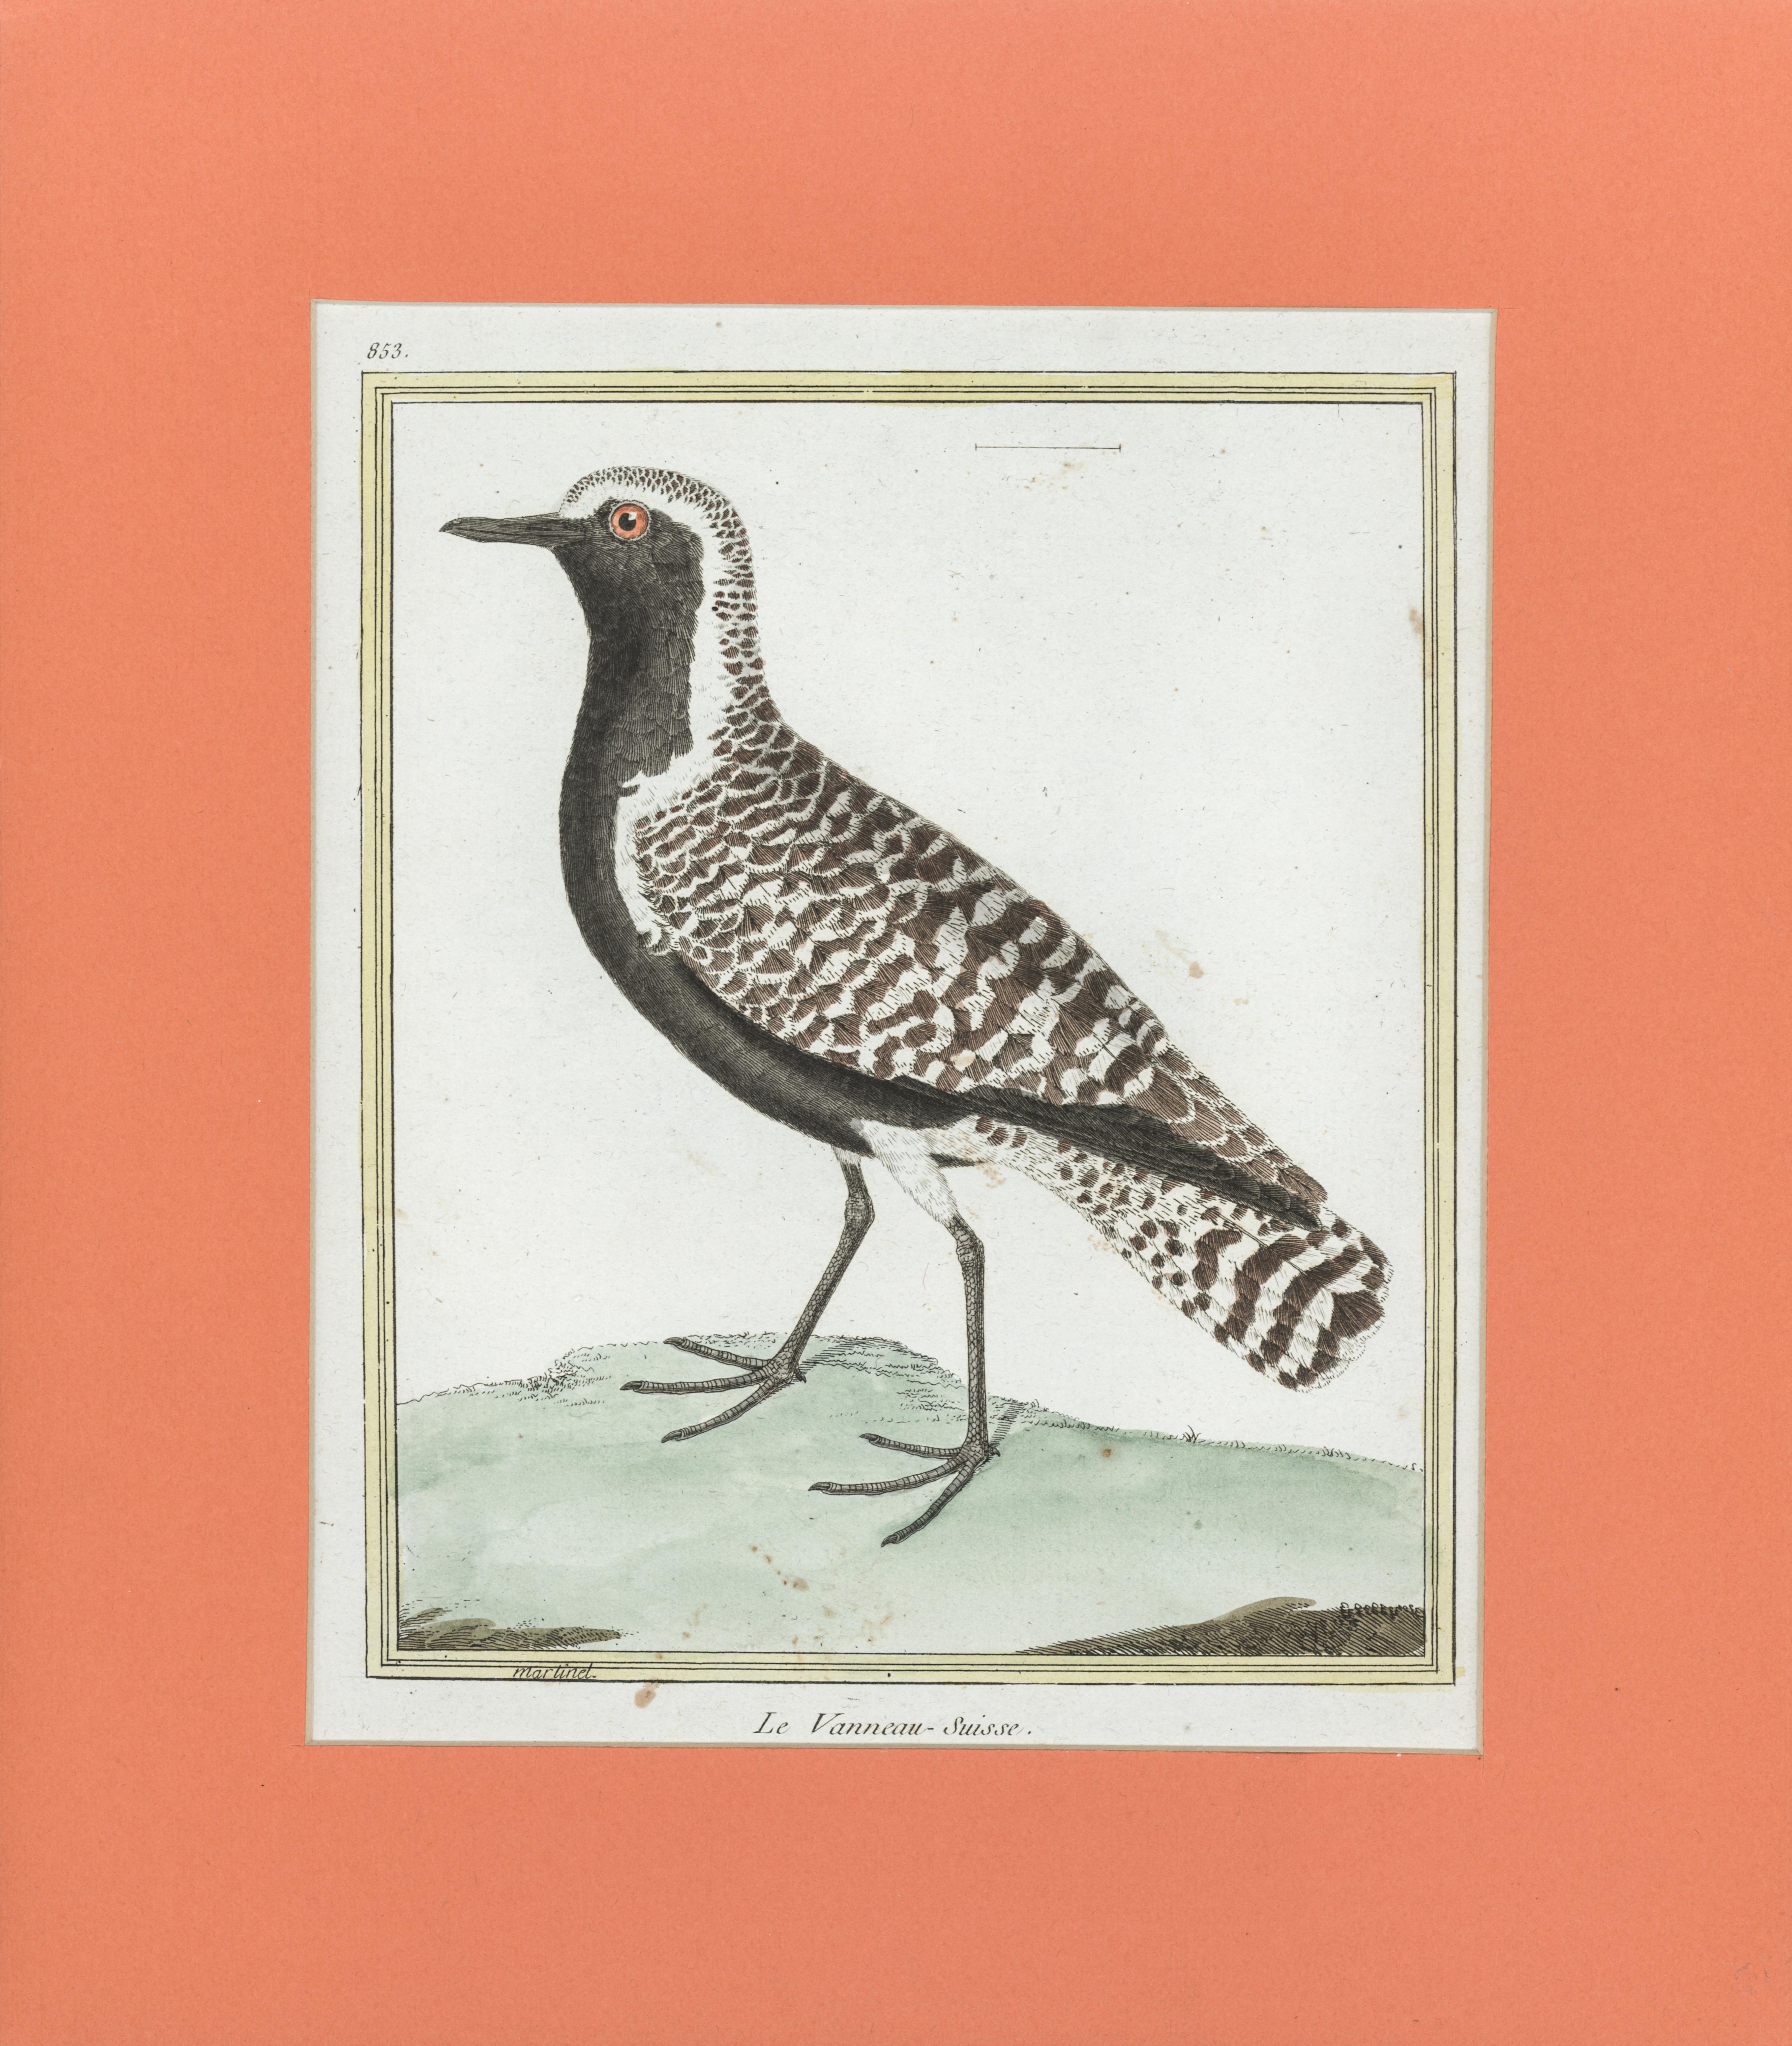 Francois Nicolas Martinet Animal Print - Le Vanneau - Suisse by Martinet